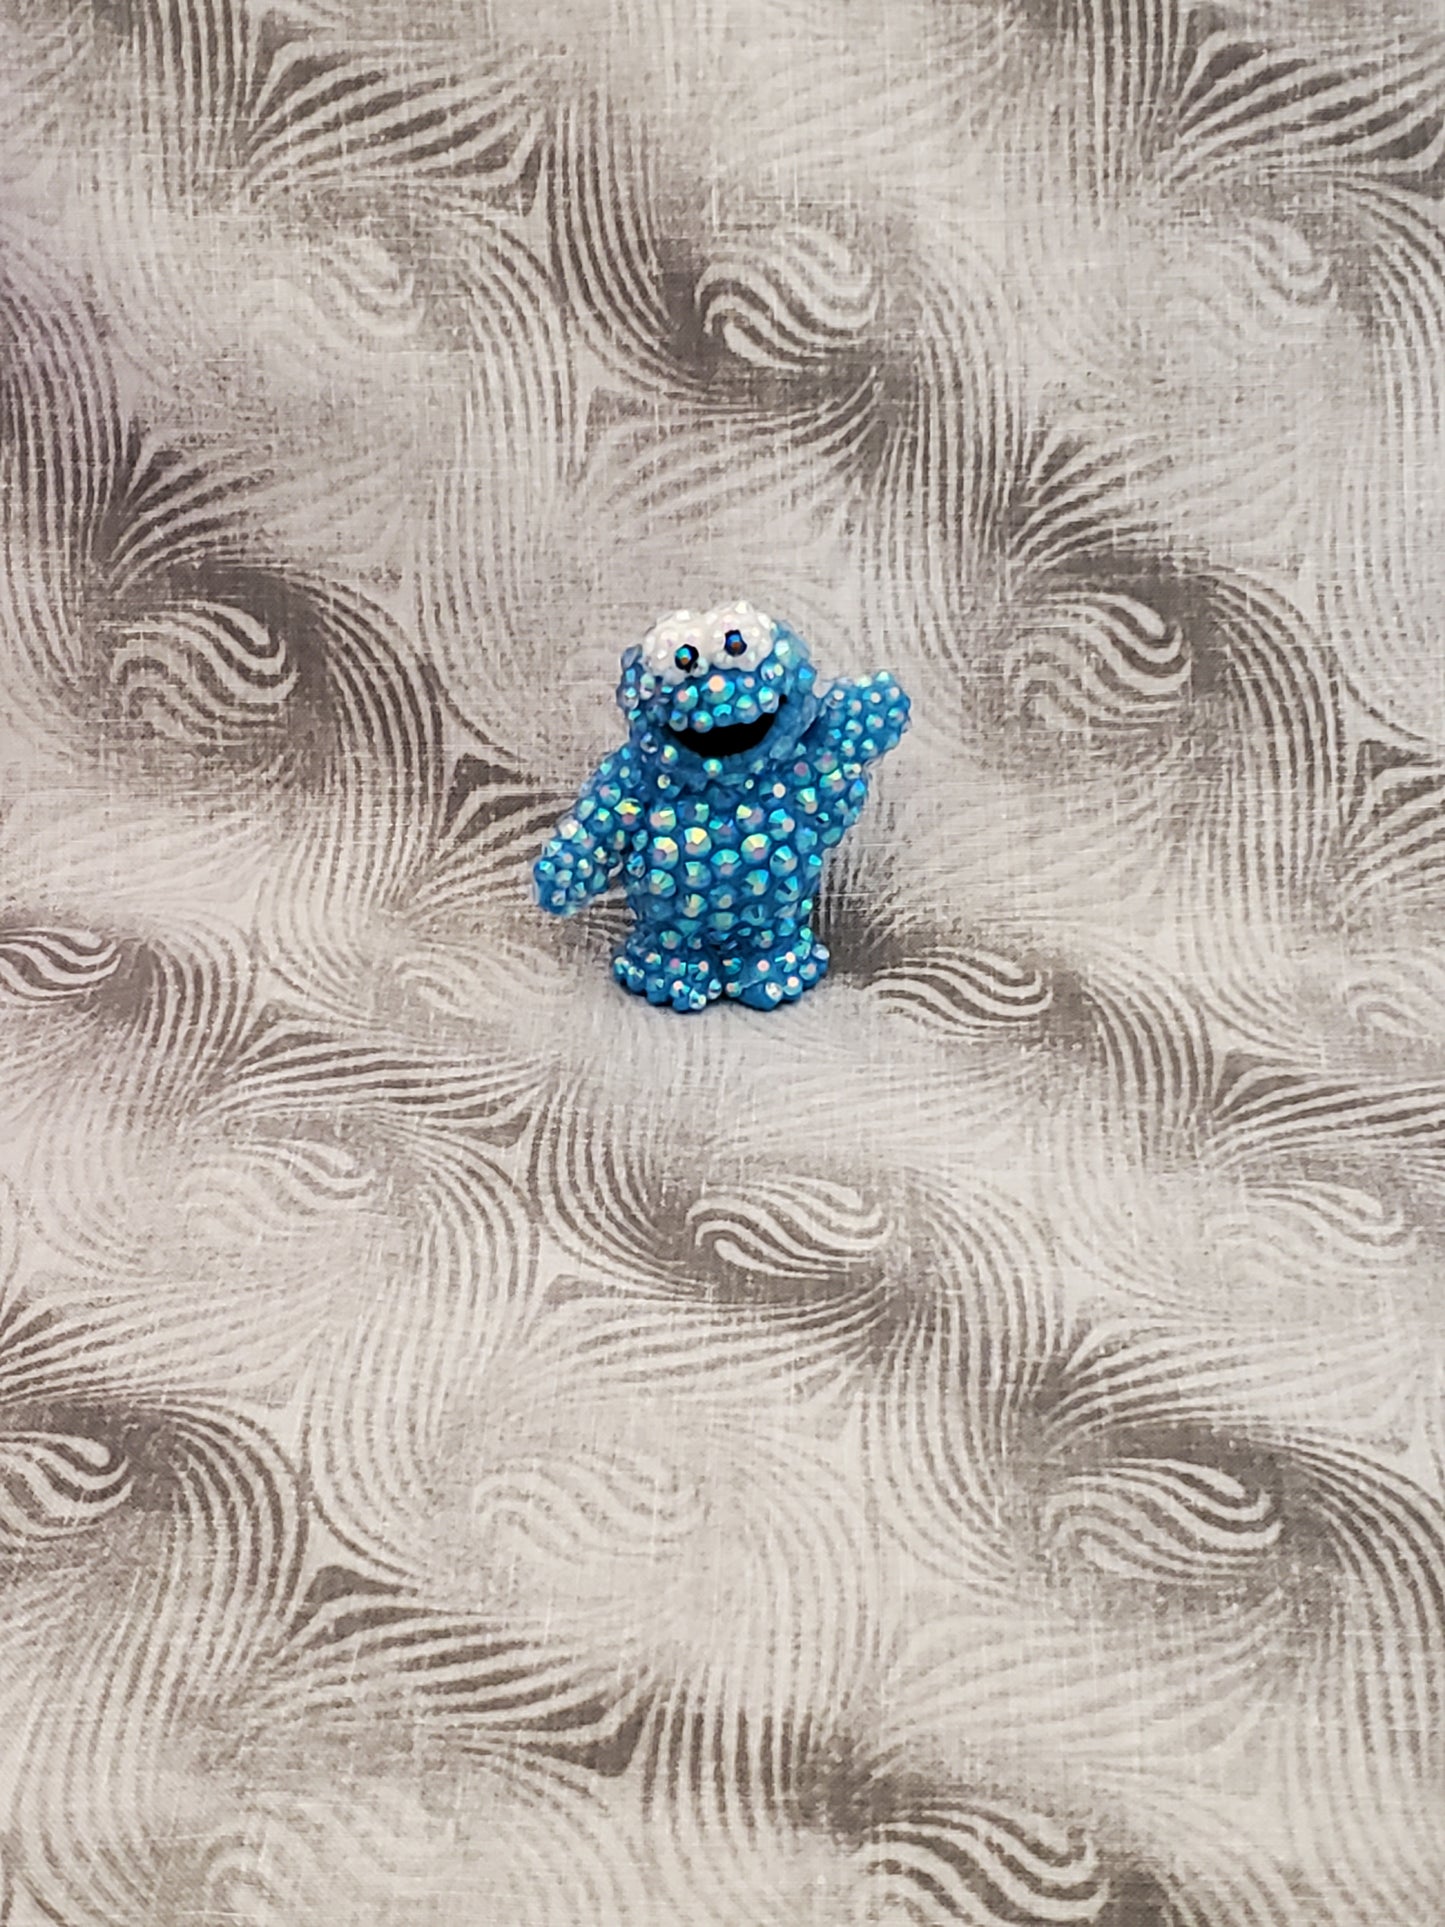 Sparkly Rhinestone Cookie Monster Decoration